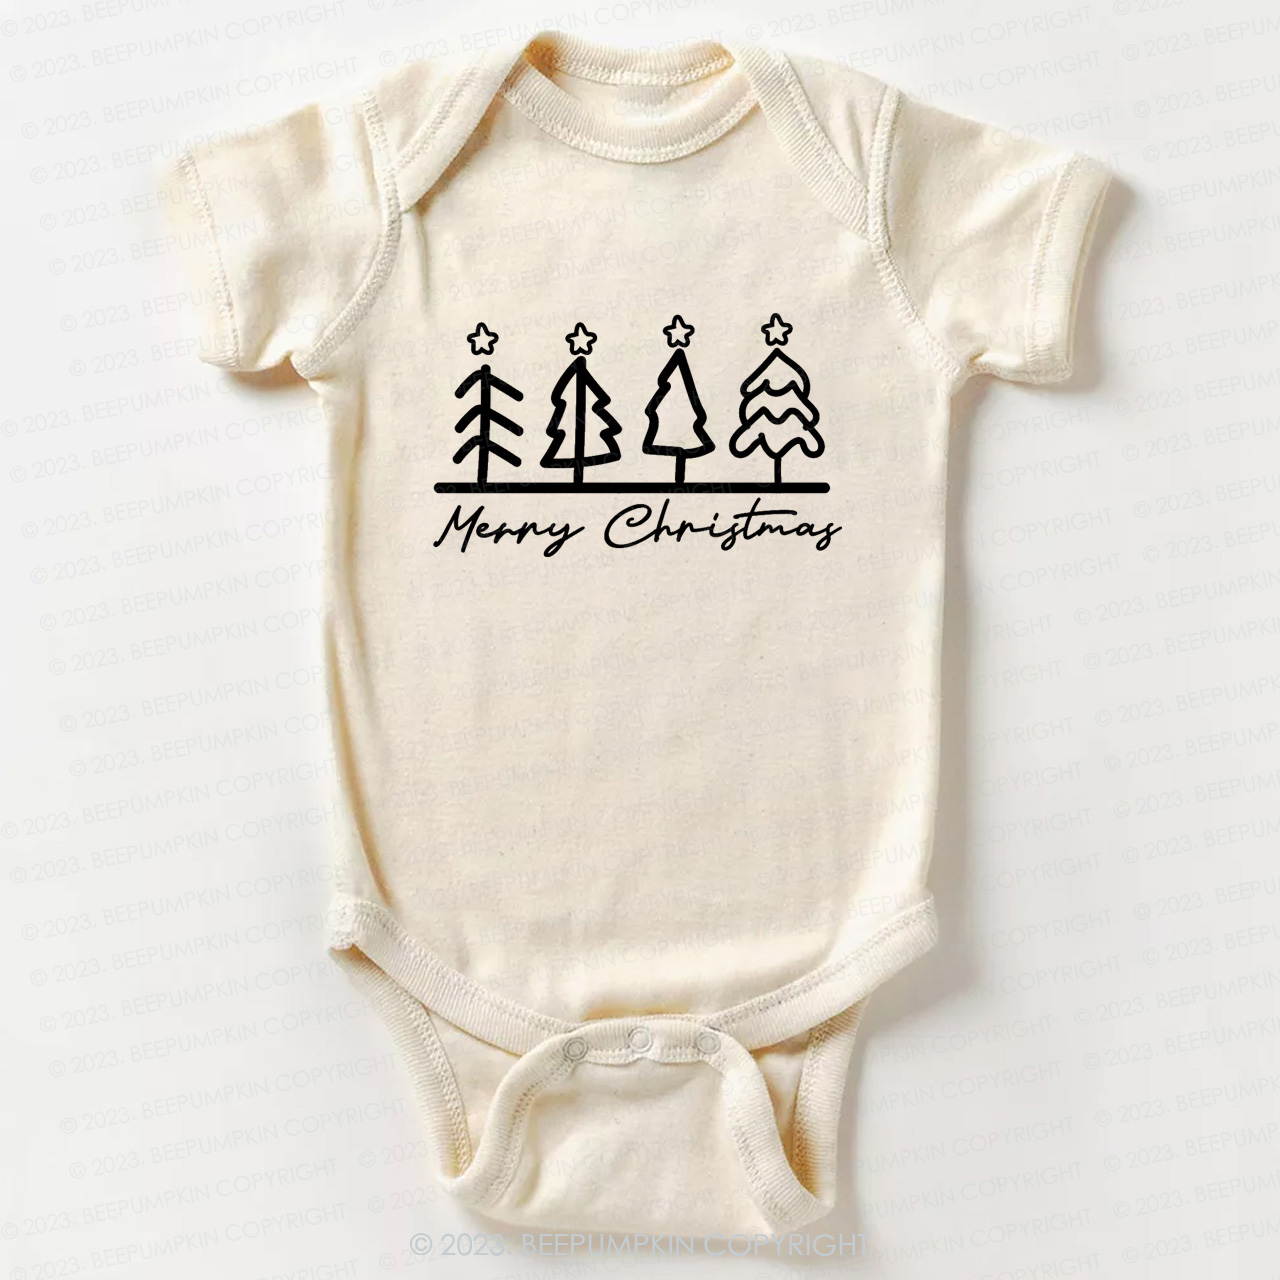 Natural Toddler Tee Christmas Tree Bodysuit For Baby Beepumpkin